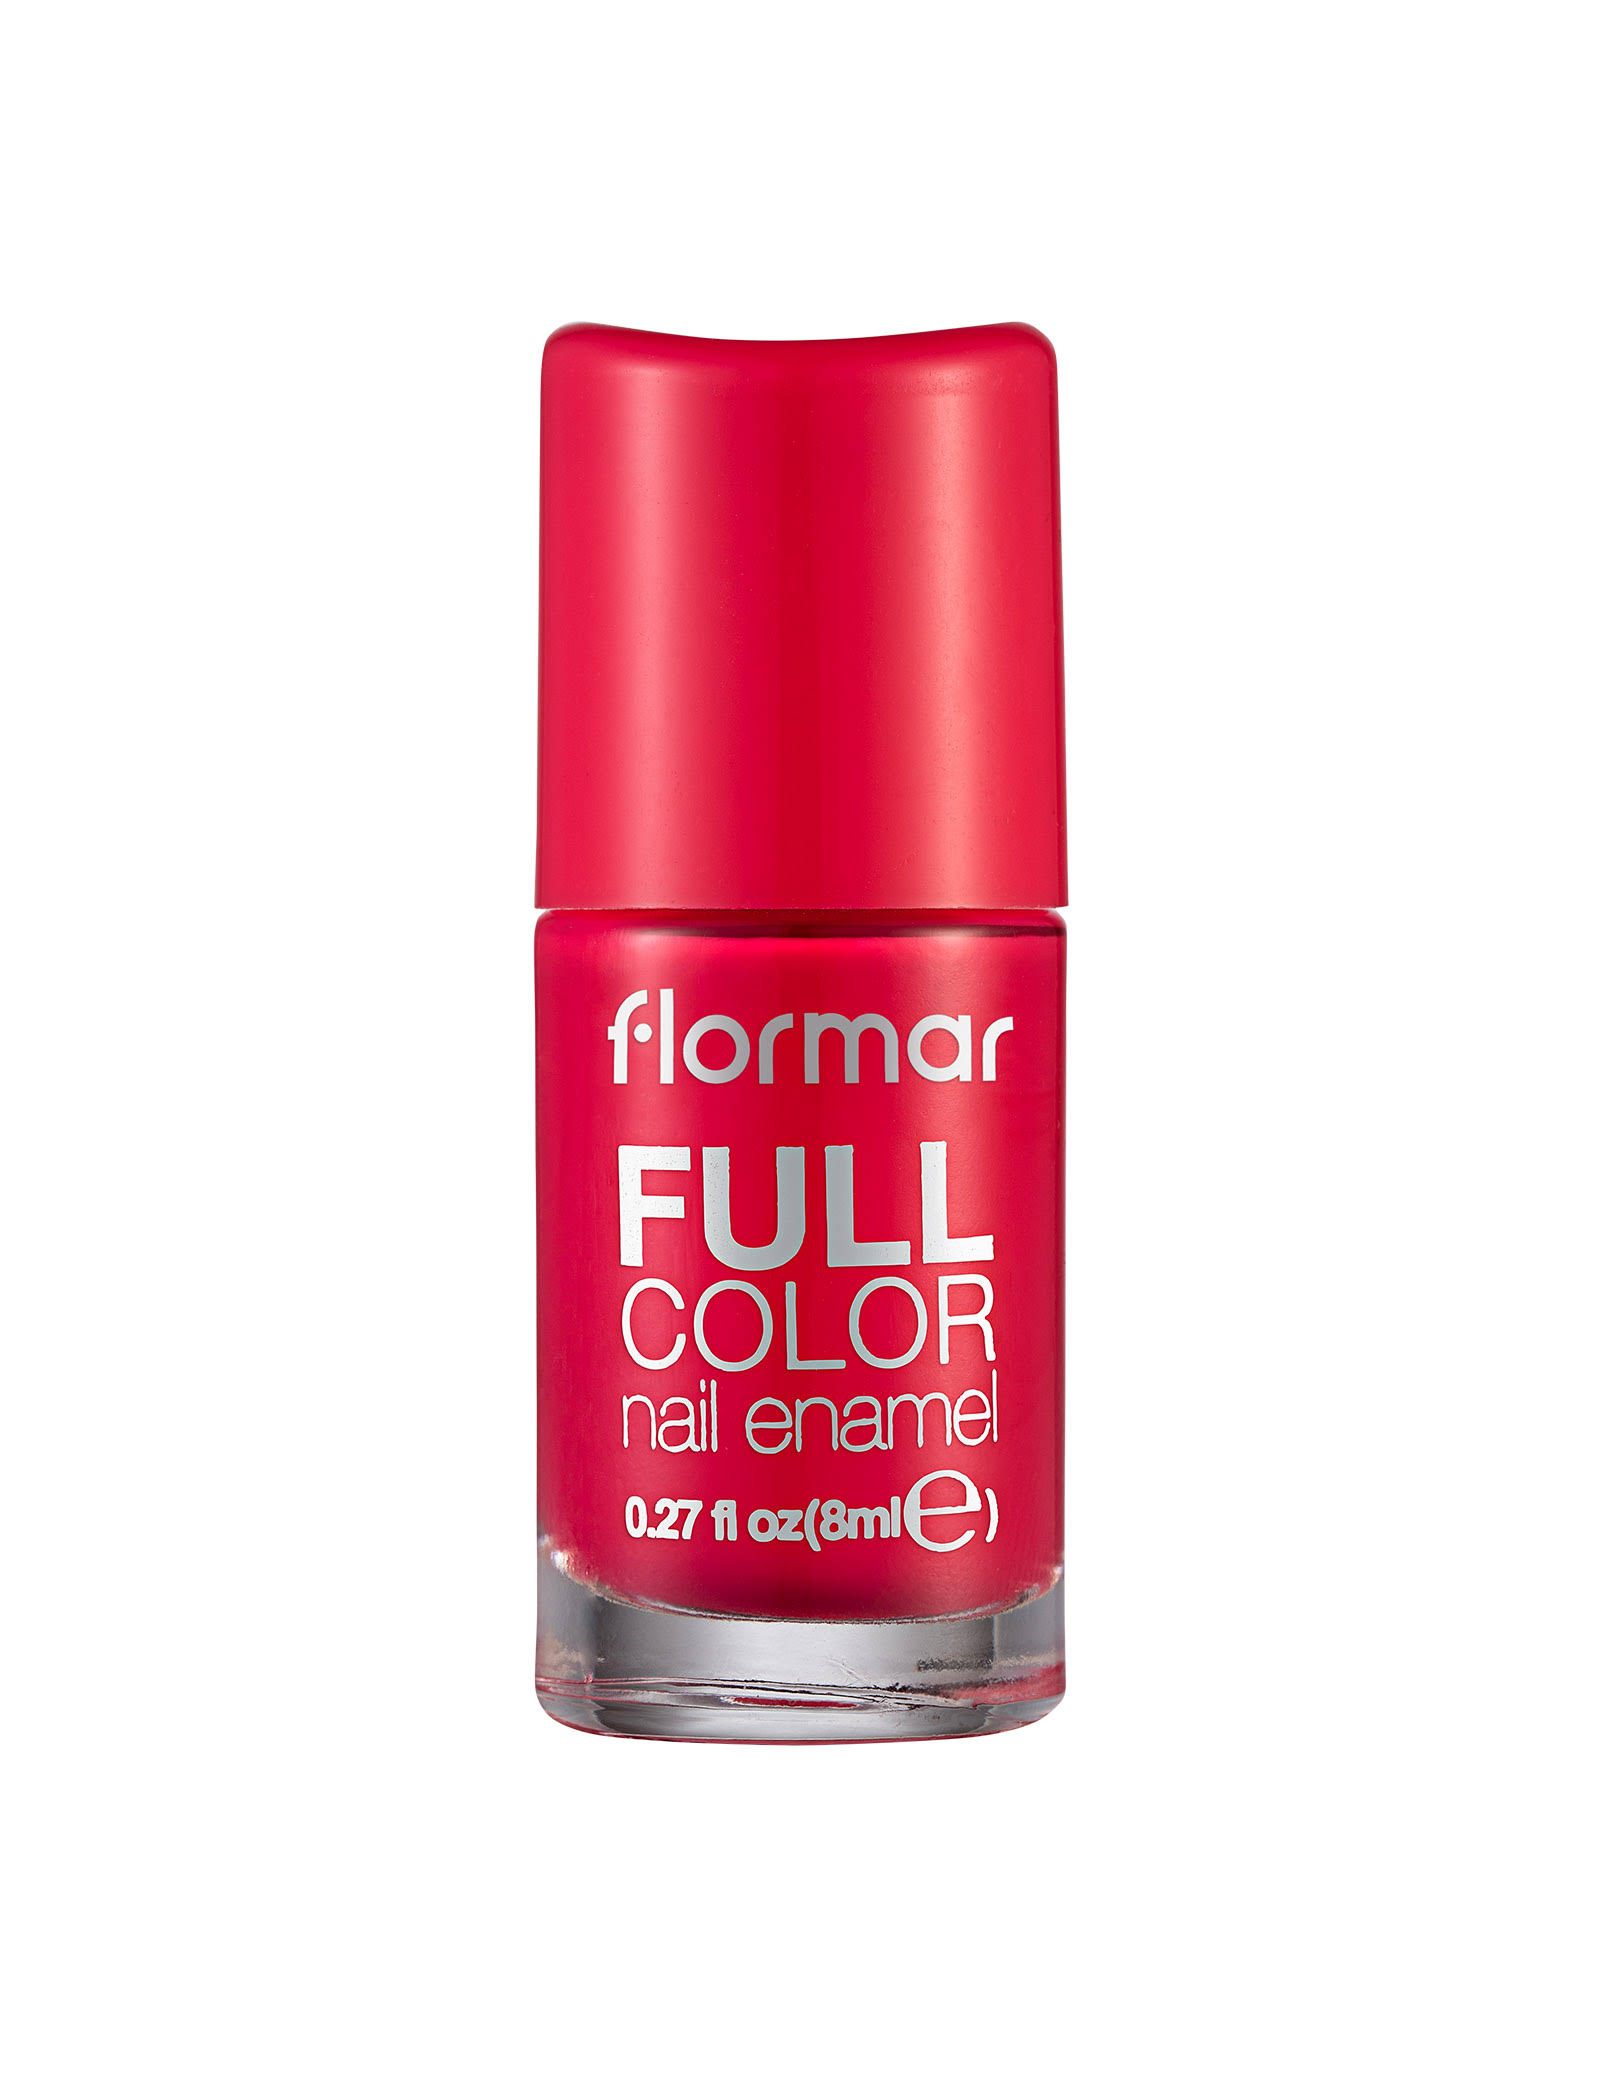 Flormar Full Color Nail Enamel - Bright Azalea, 8ml